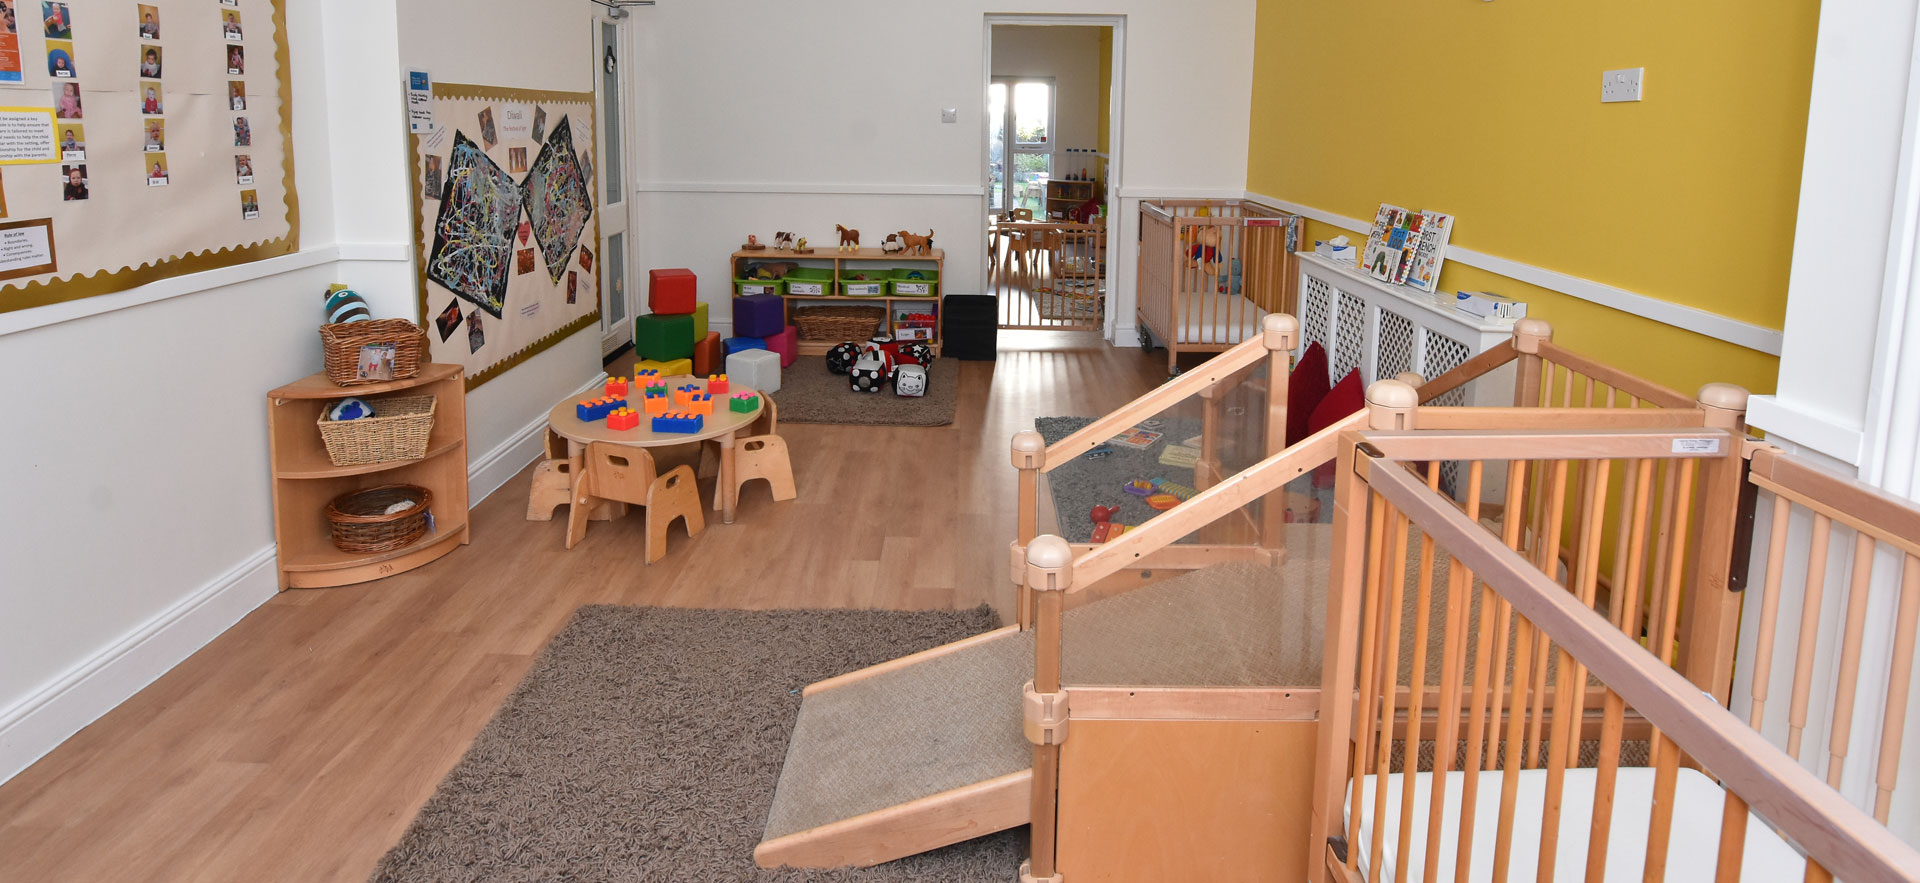 Chiswick Park Day Nursery and Preschool